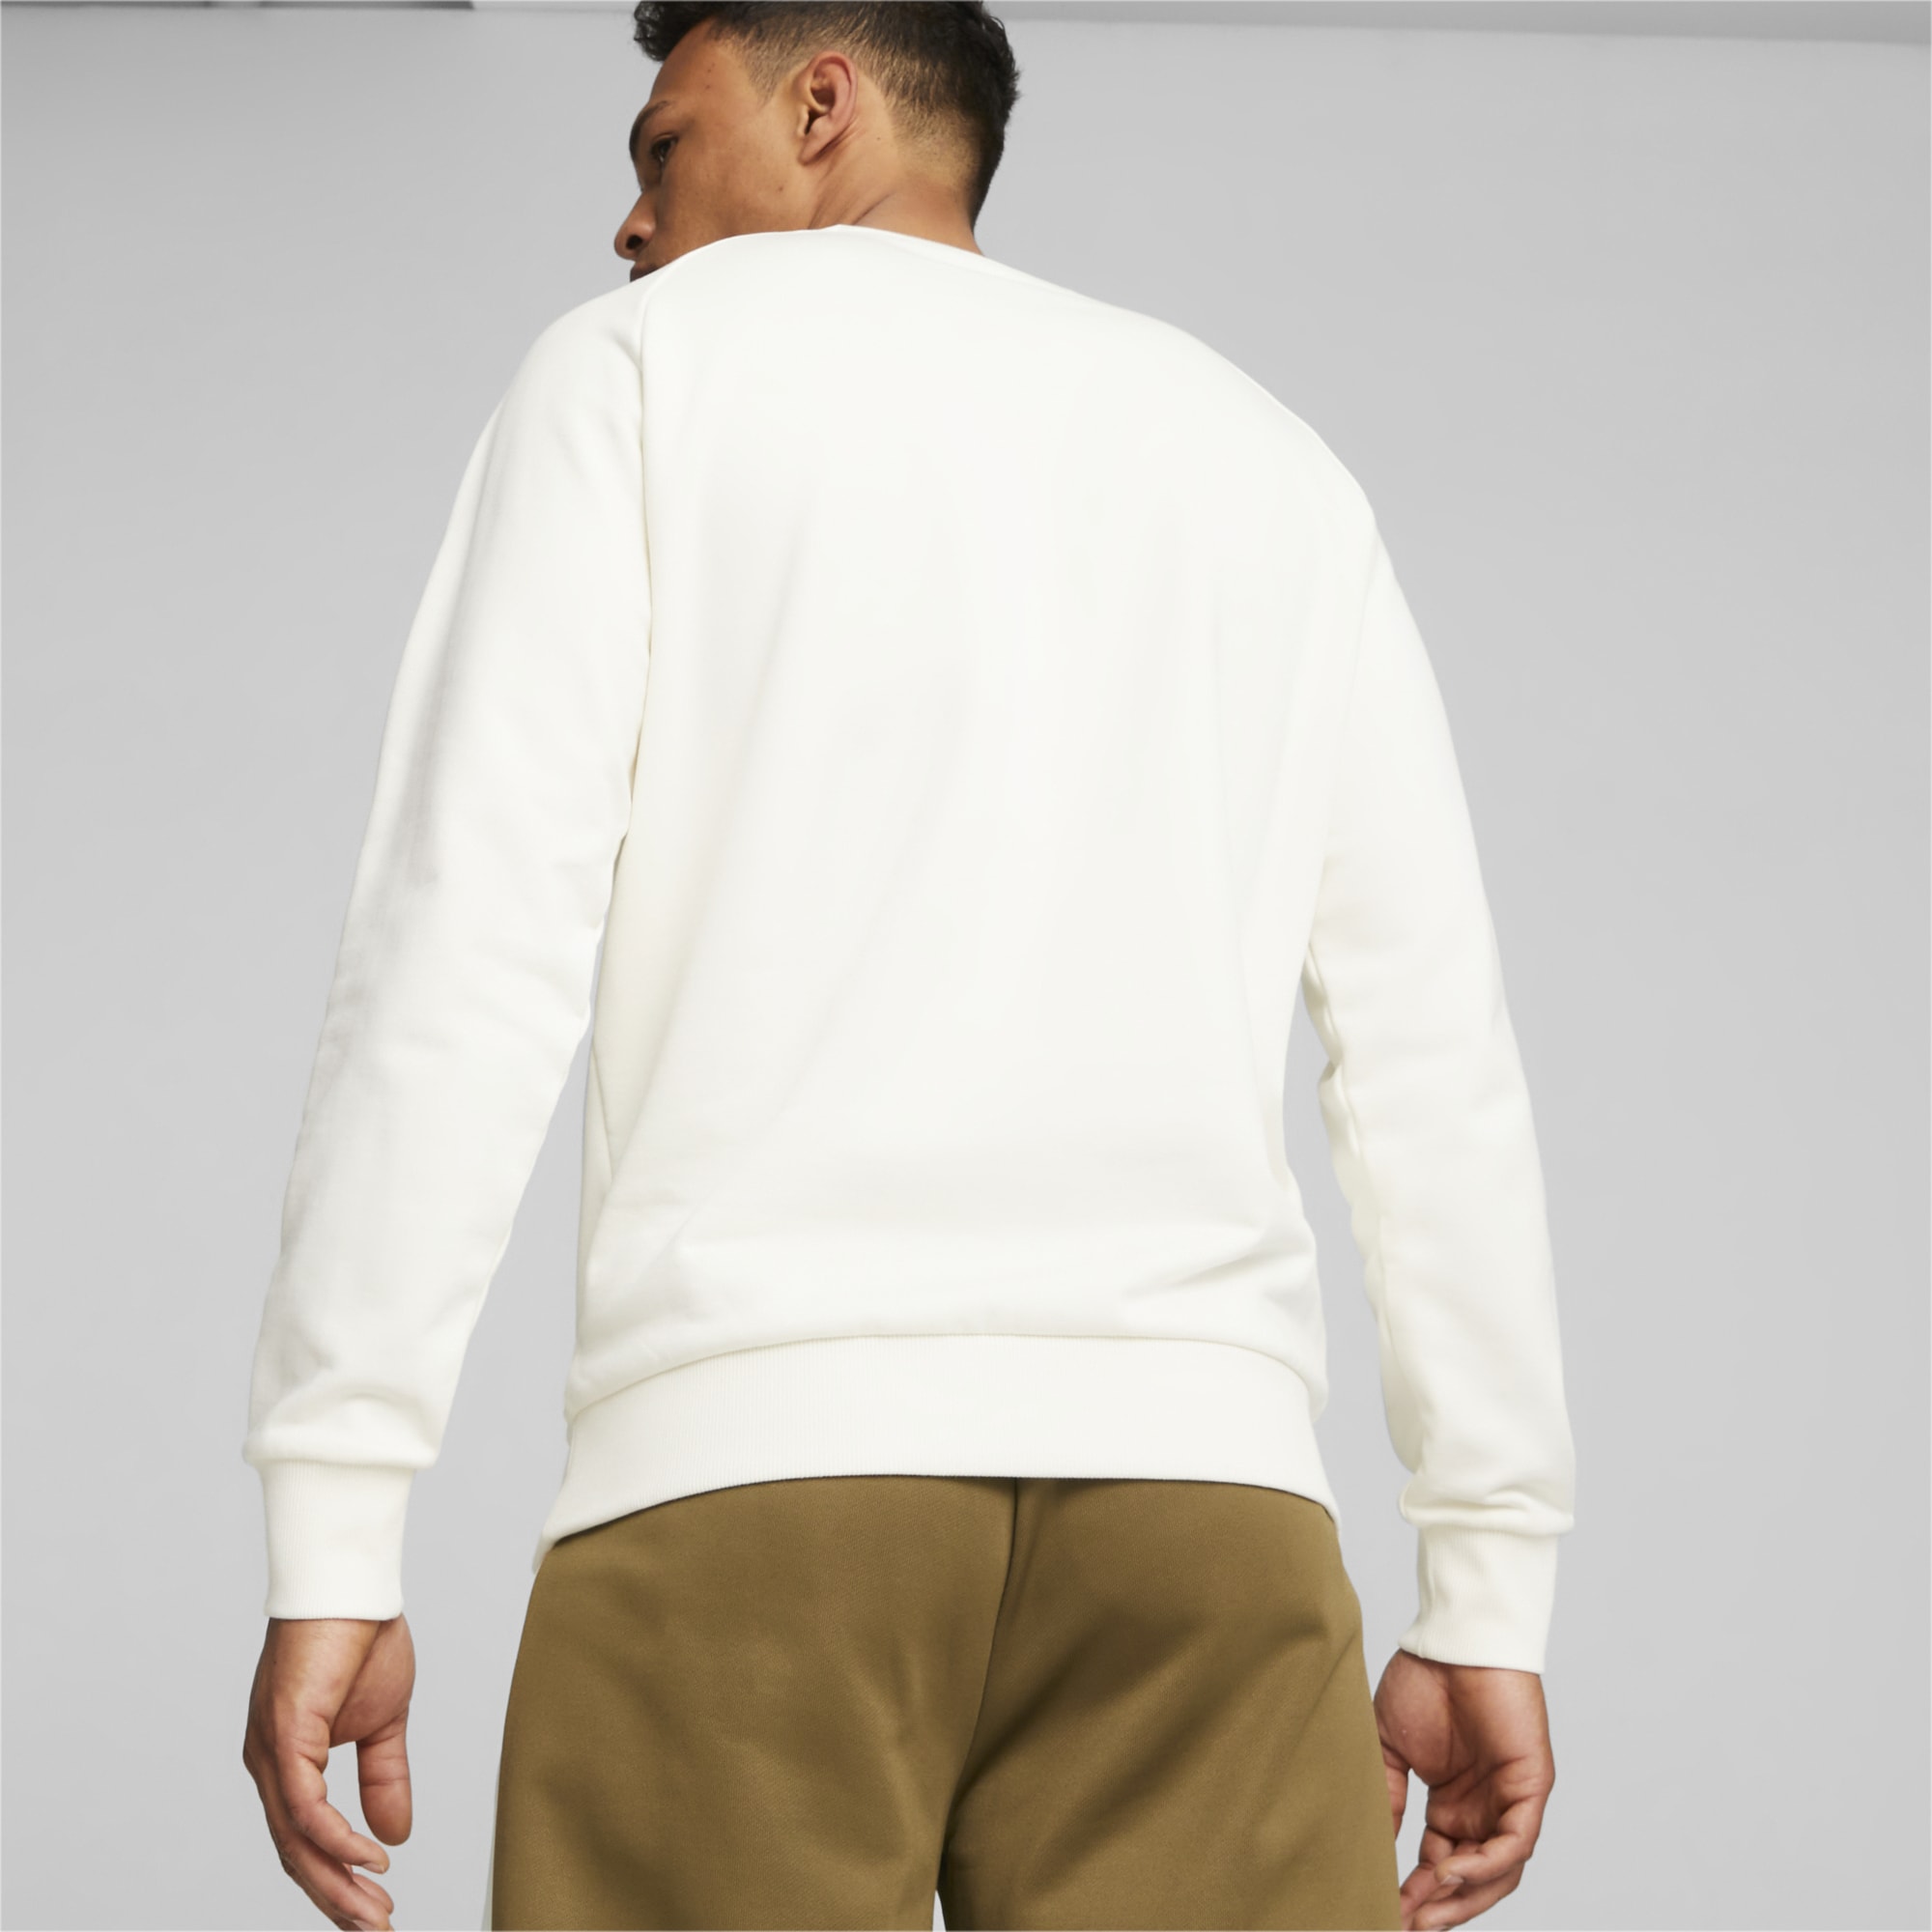 PUMA Classics Men's Sweatshirt, Warm White, Size XS, Clothing